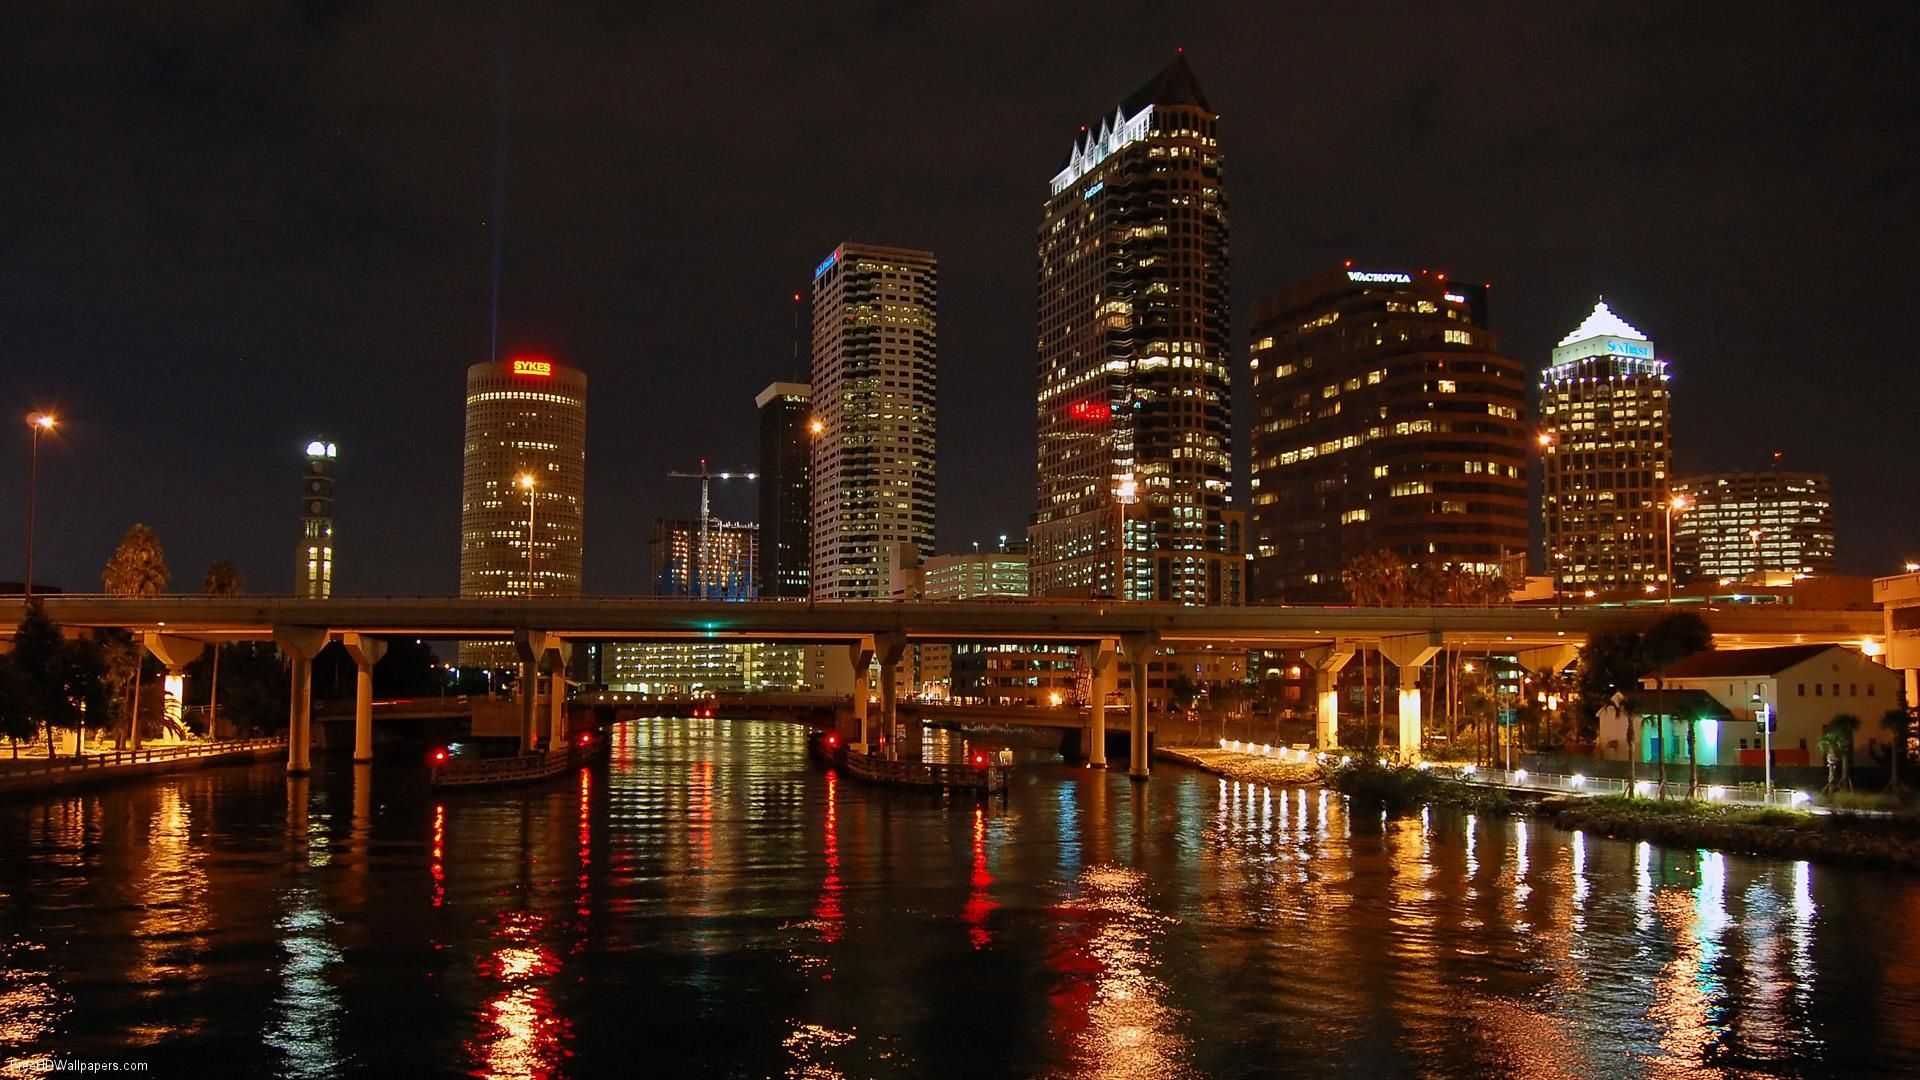 Tampa Bay NightScape. Home Sweet Home!. Tampa bay florida, City lights at night, City wallpaper